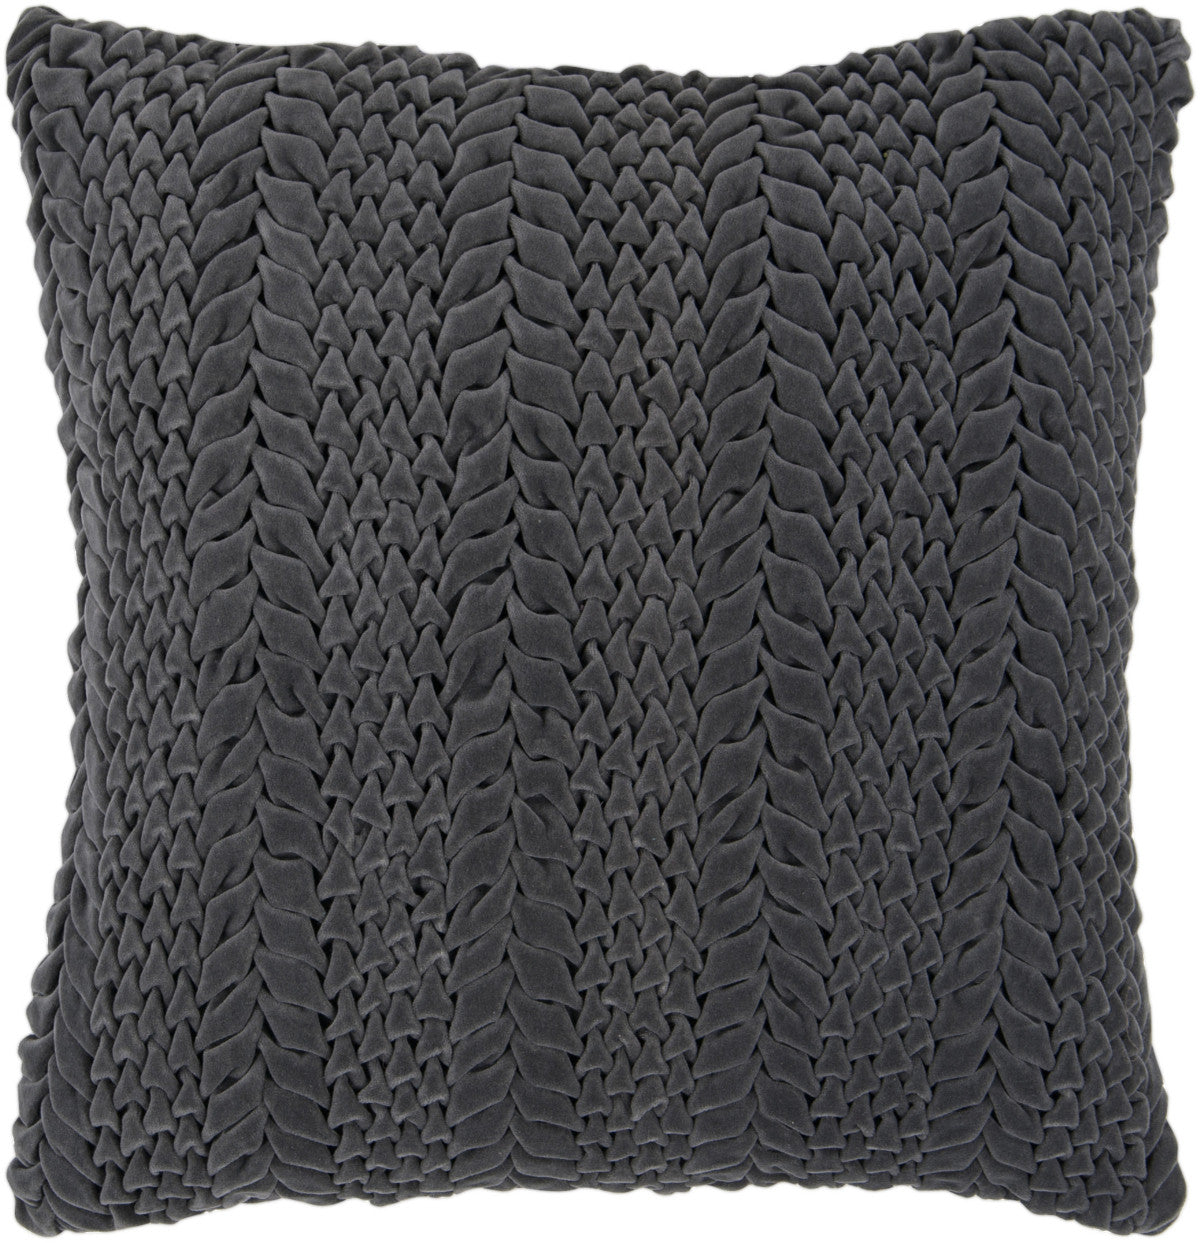 Surya Velvet Luxe Textured Triangles P-0276 Pillow